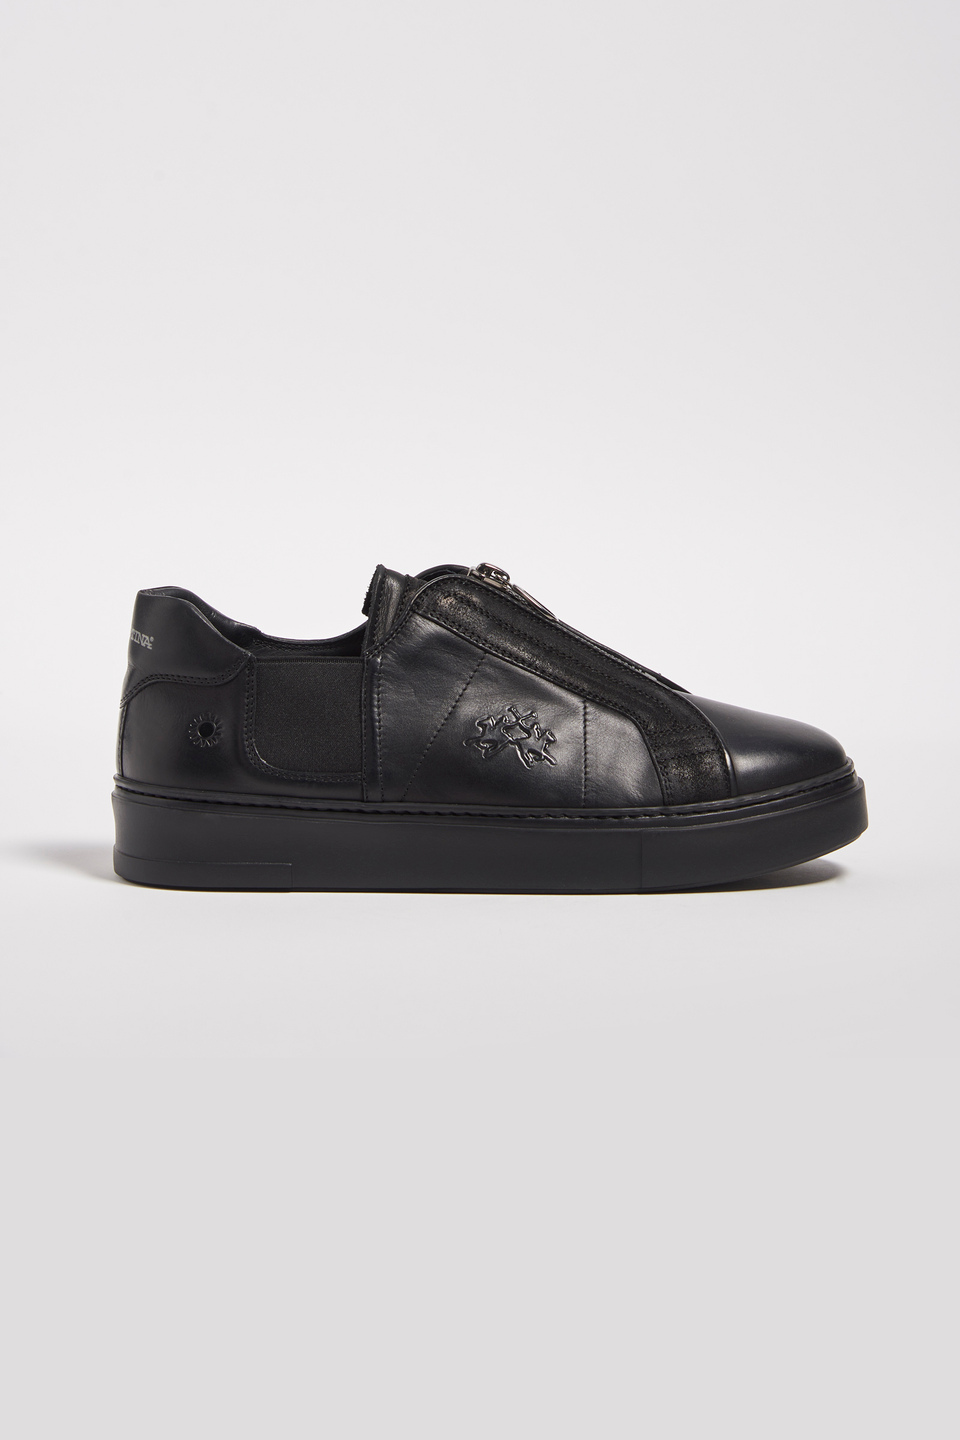 Leather shoes featuring a black crepe sole | La Martina - Official Online Shop